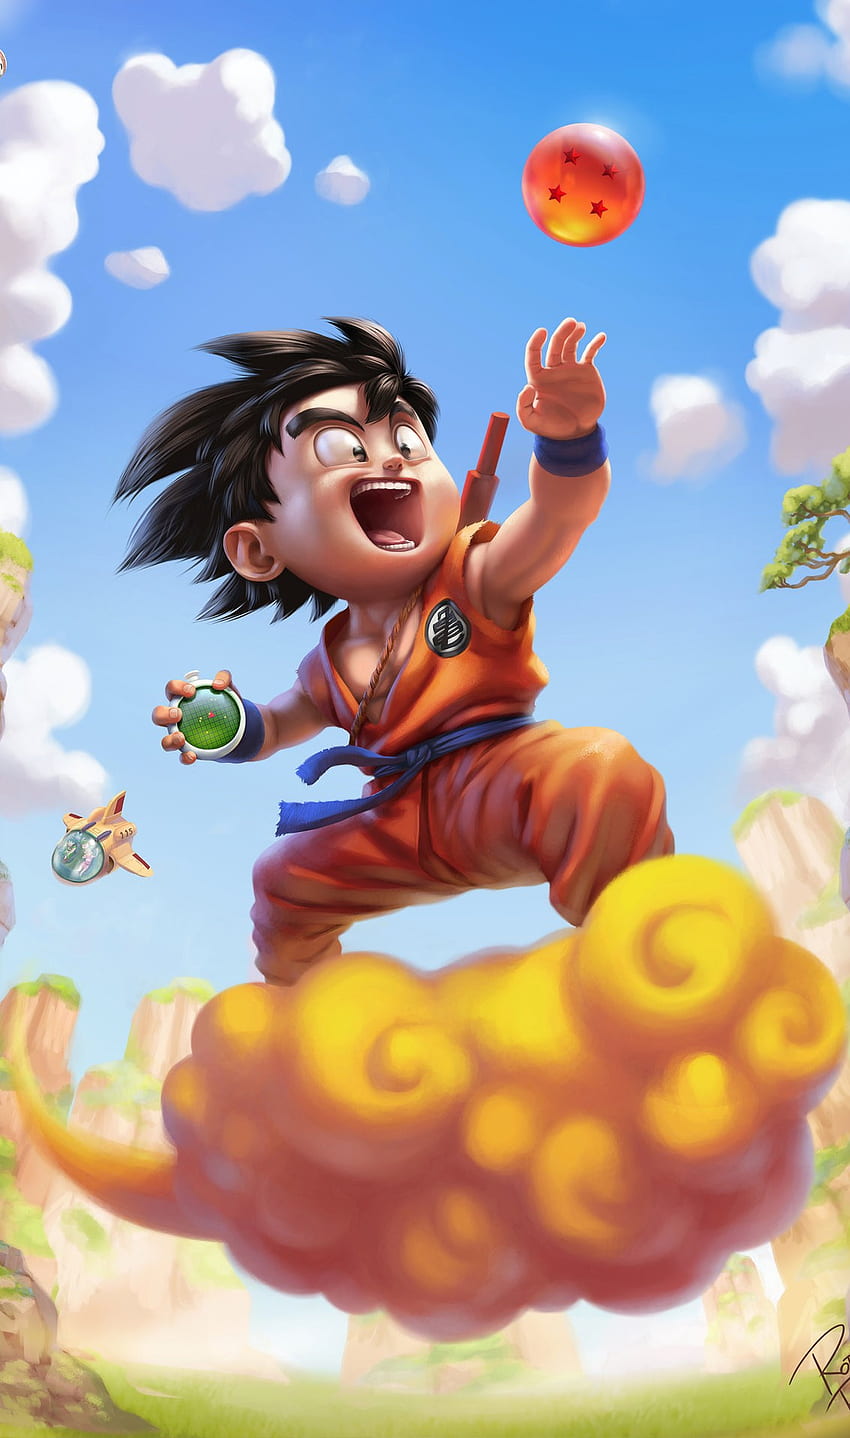 Kid Goku - Latar Belakang Kid Goku Kualitas Terbaik (, ​​), Sad Goku wallpaper ponsel HD